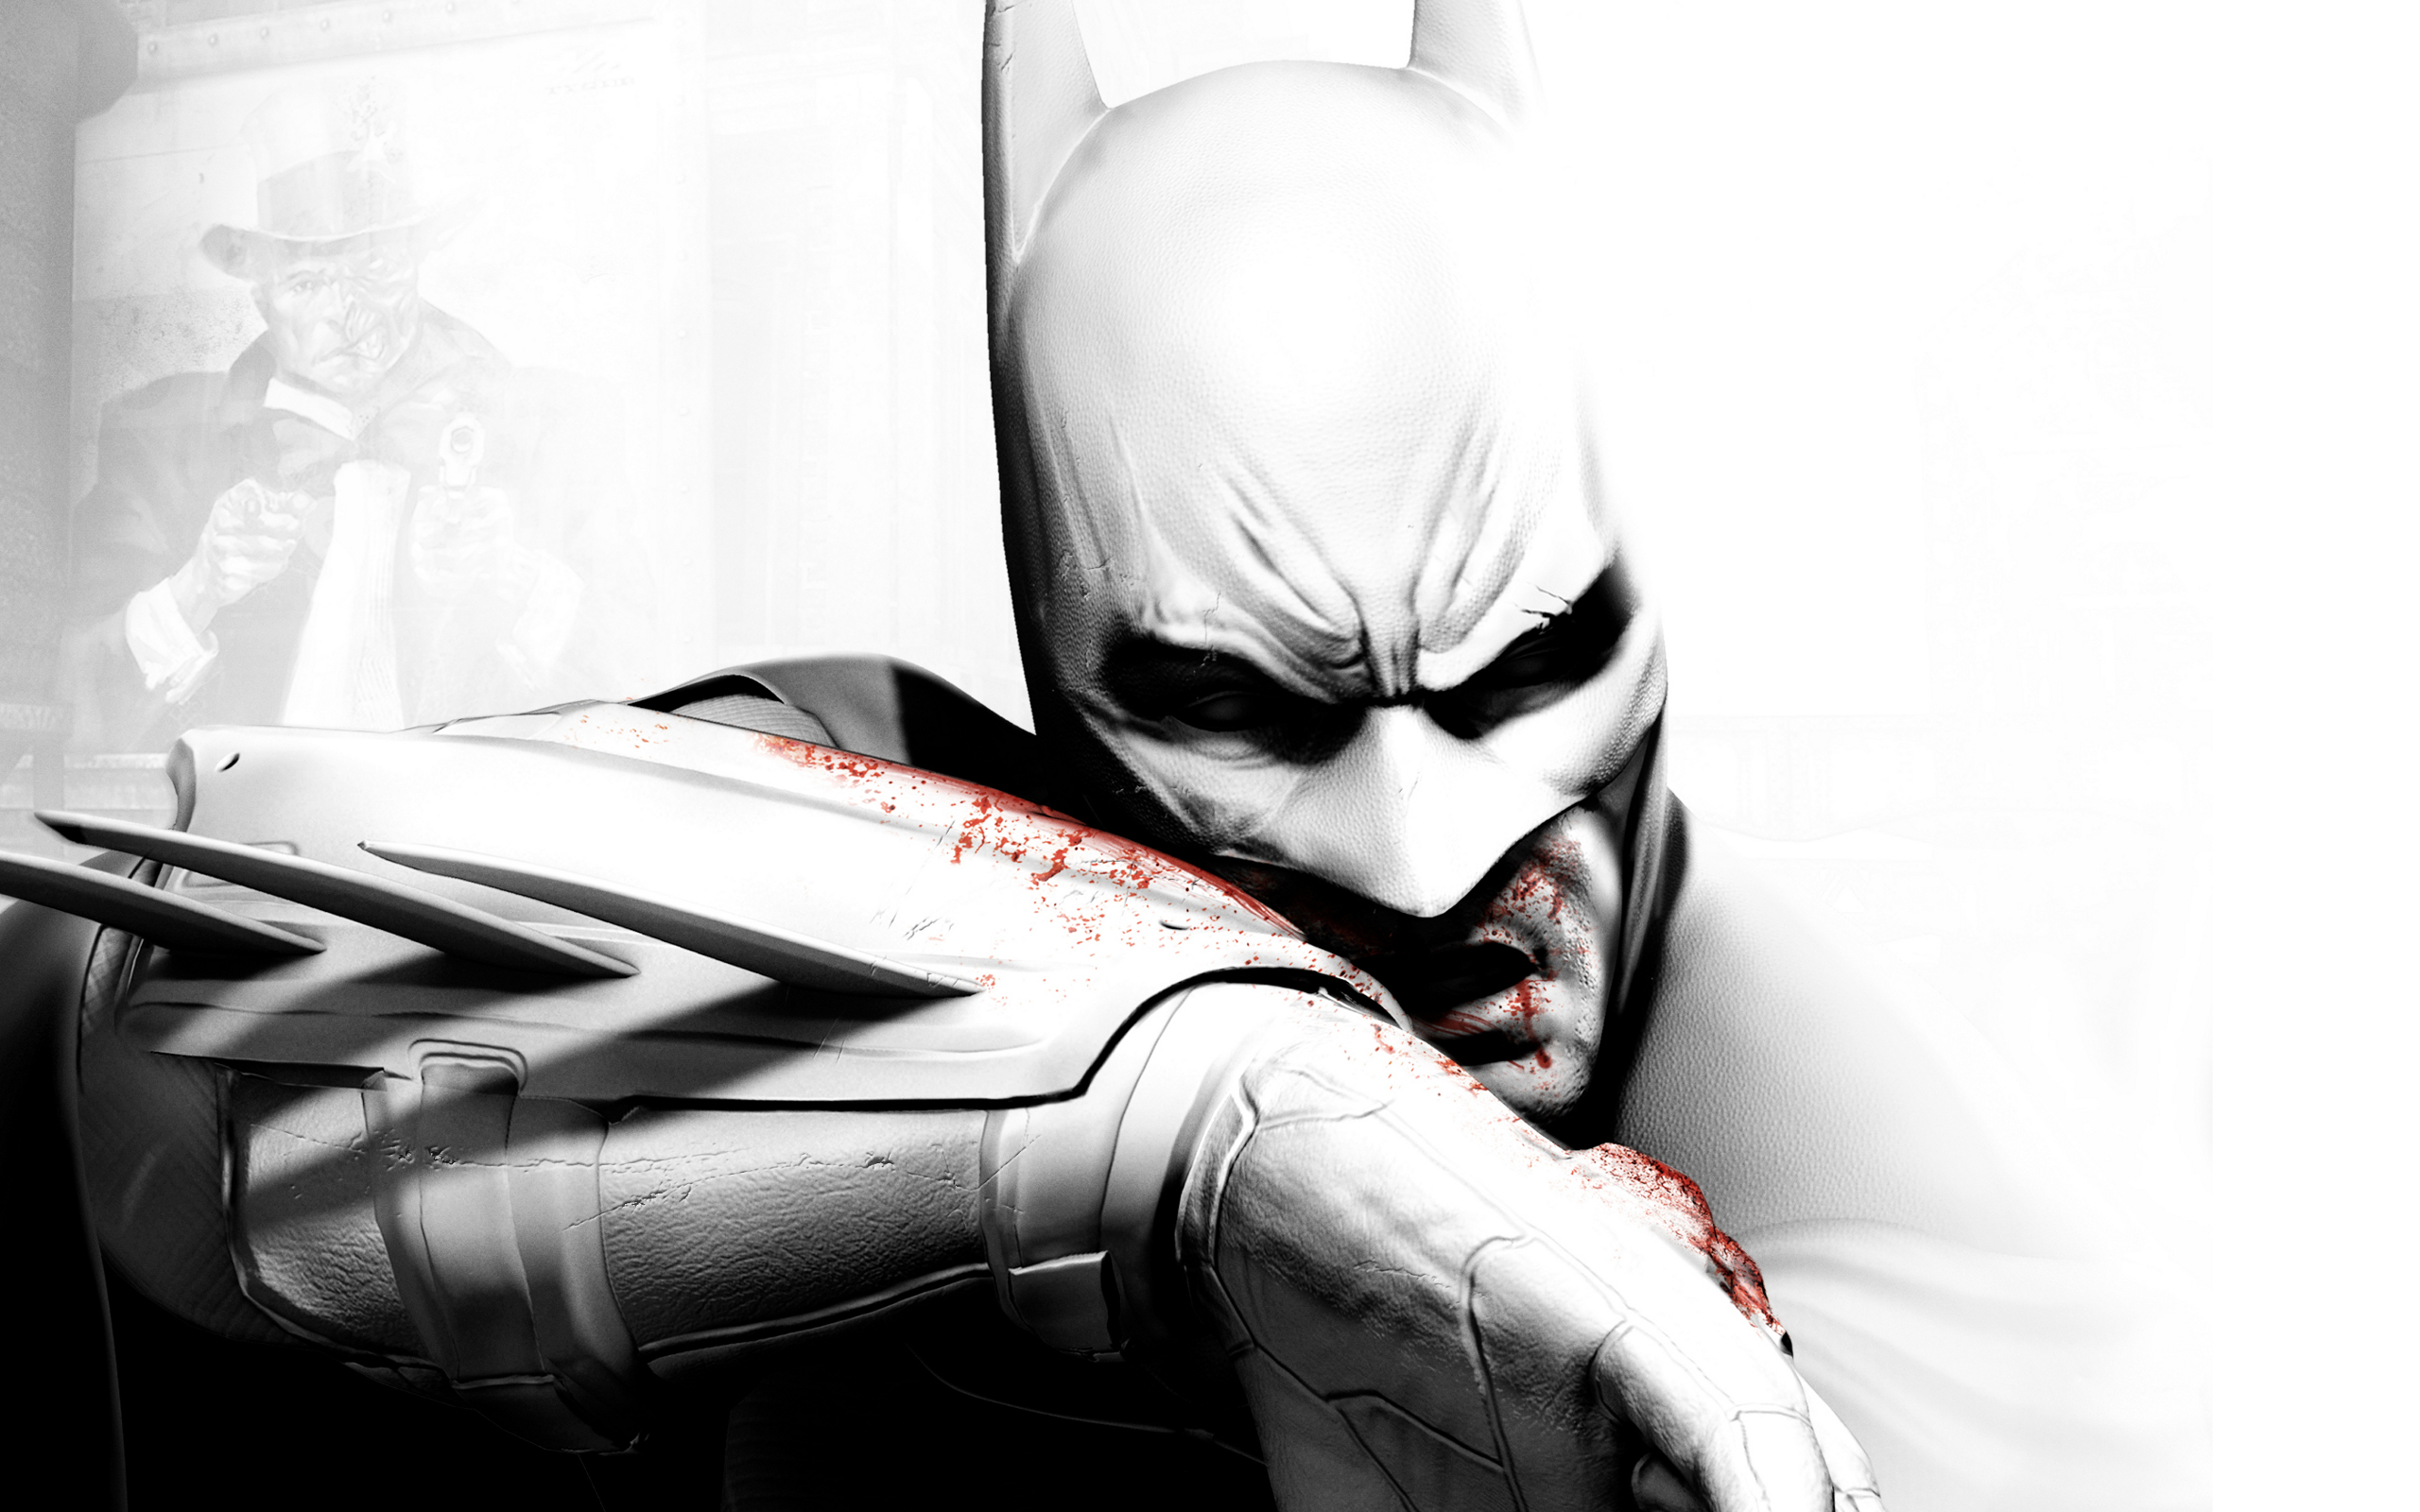 Batman: Arkham City High Quality Background on Wallpapers Vista